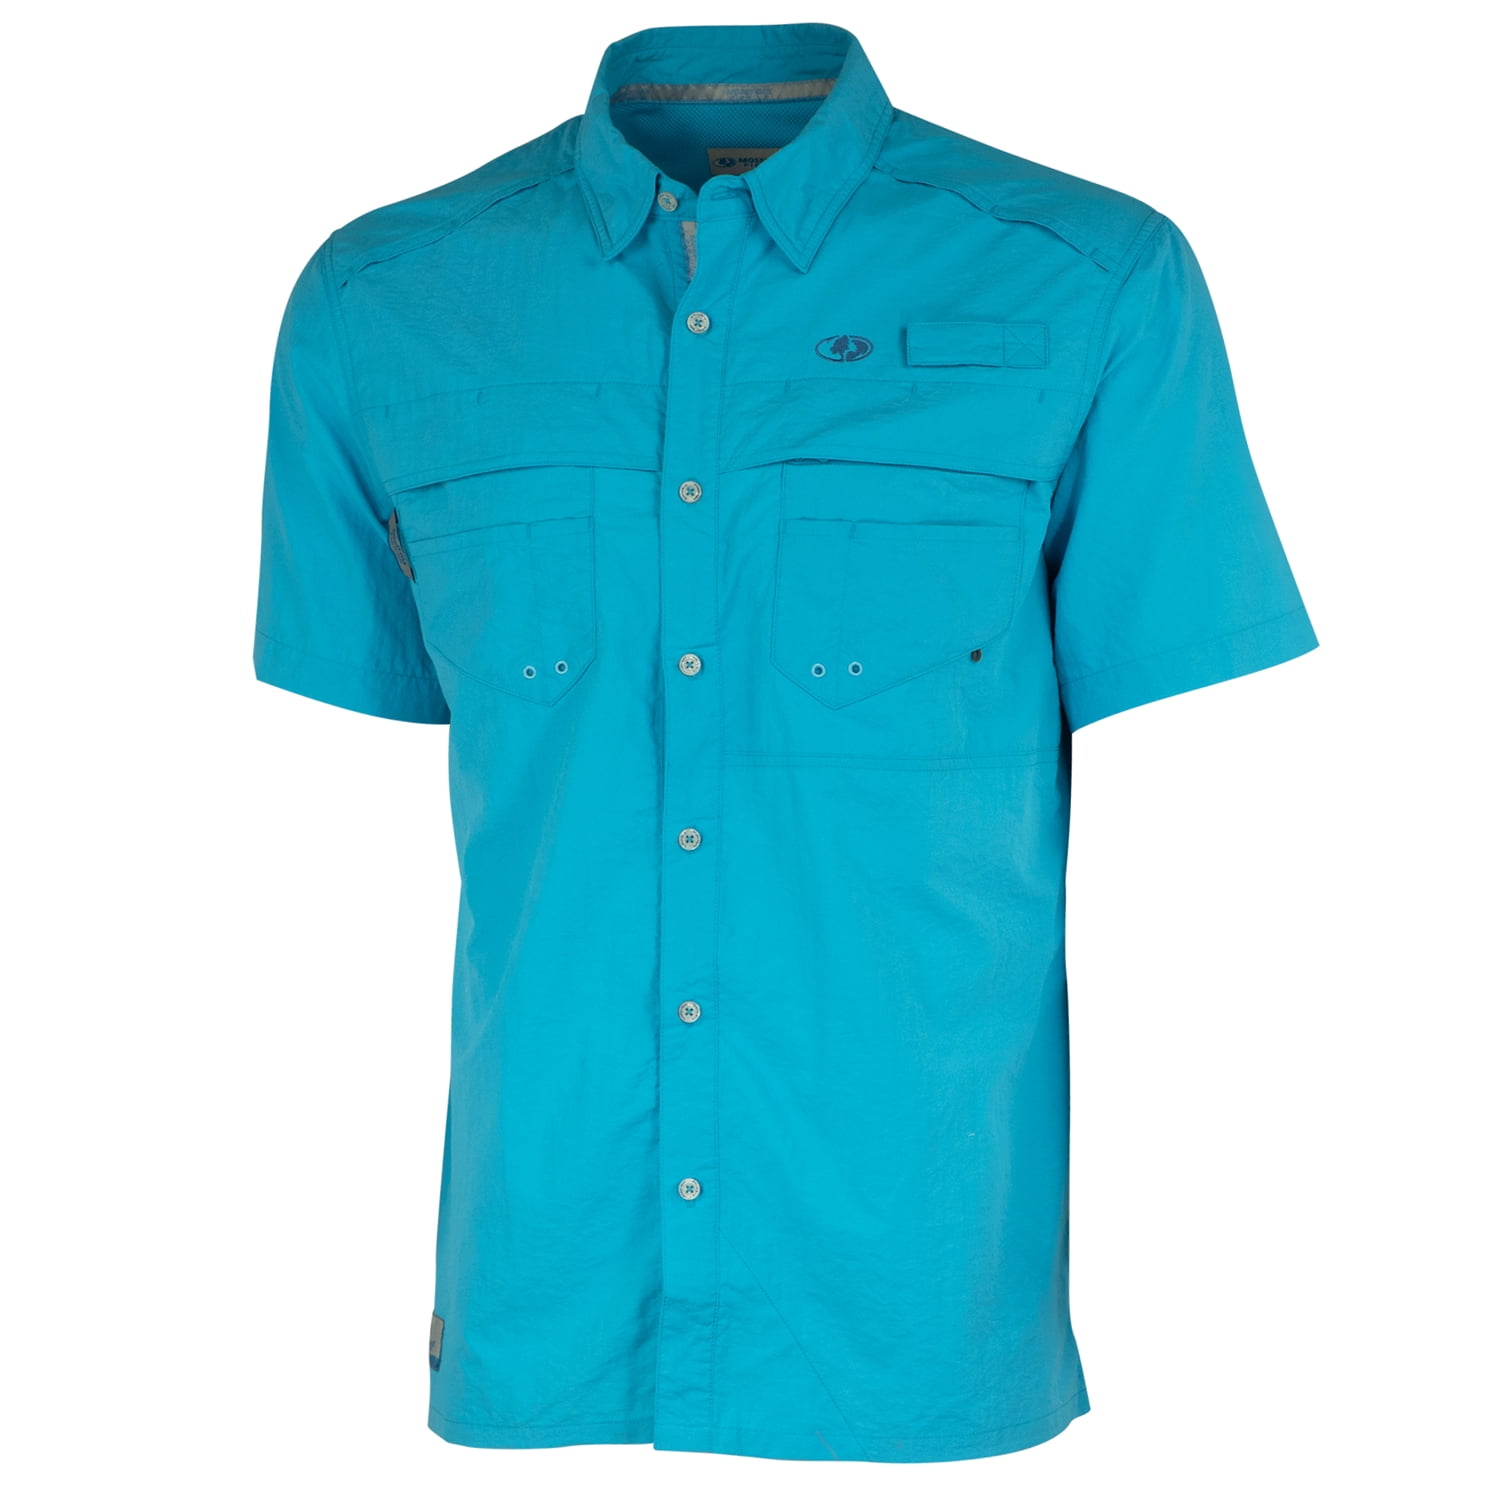 Mossy Oak Men's Short Sleeve Fishing Shirt - Walmart.com